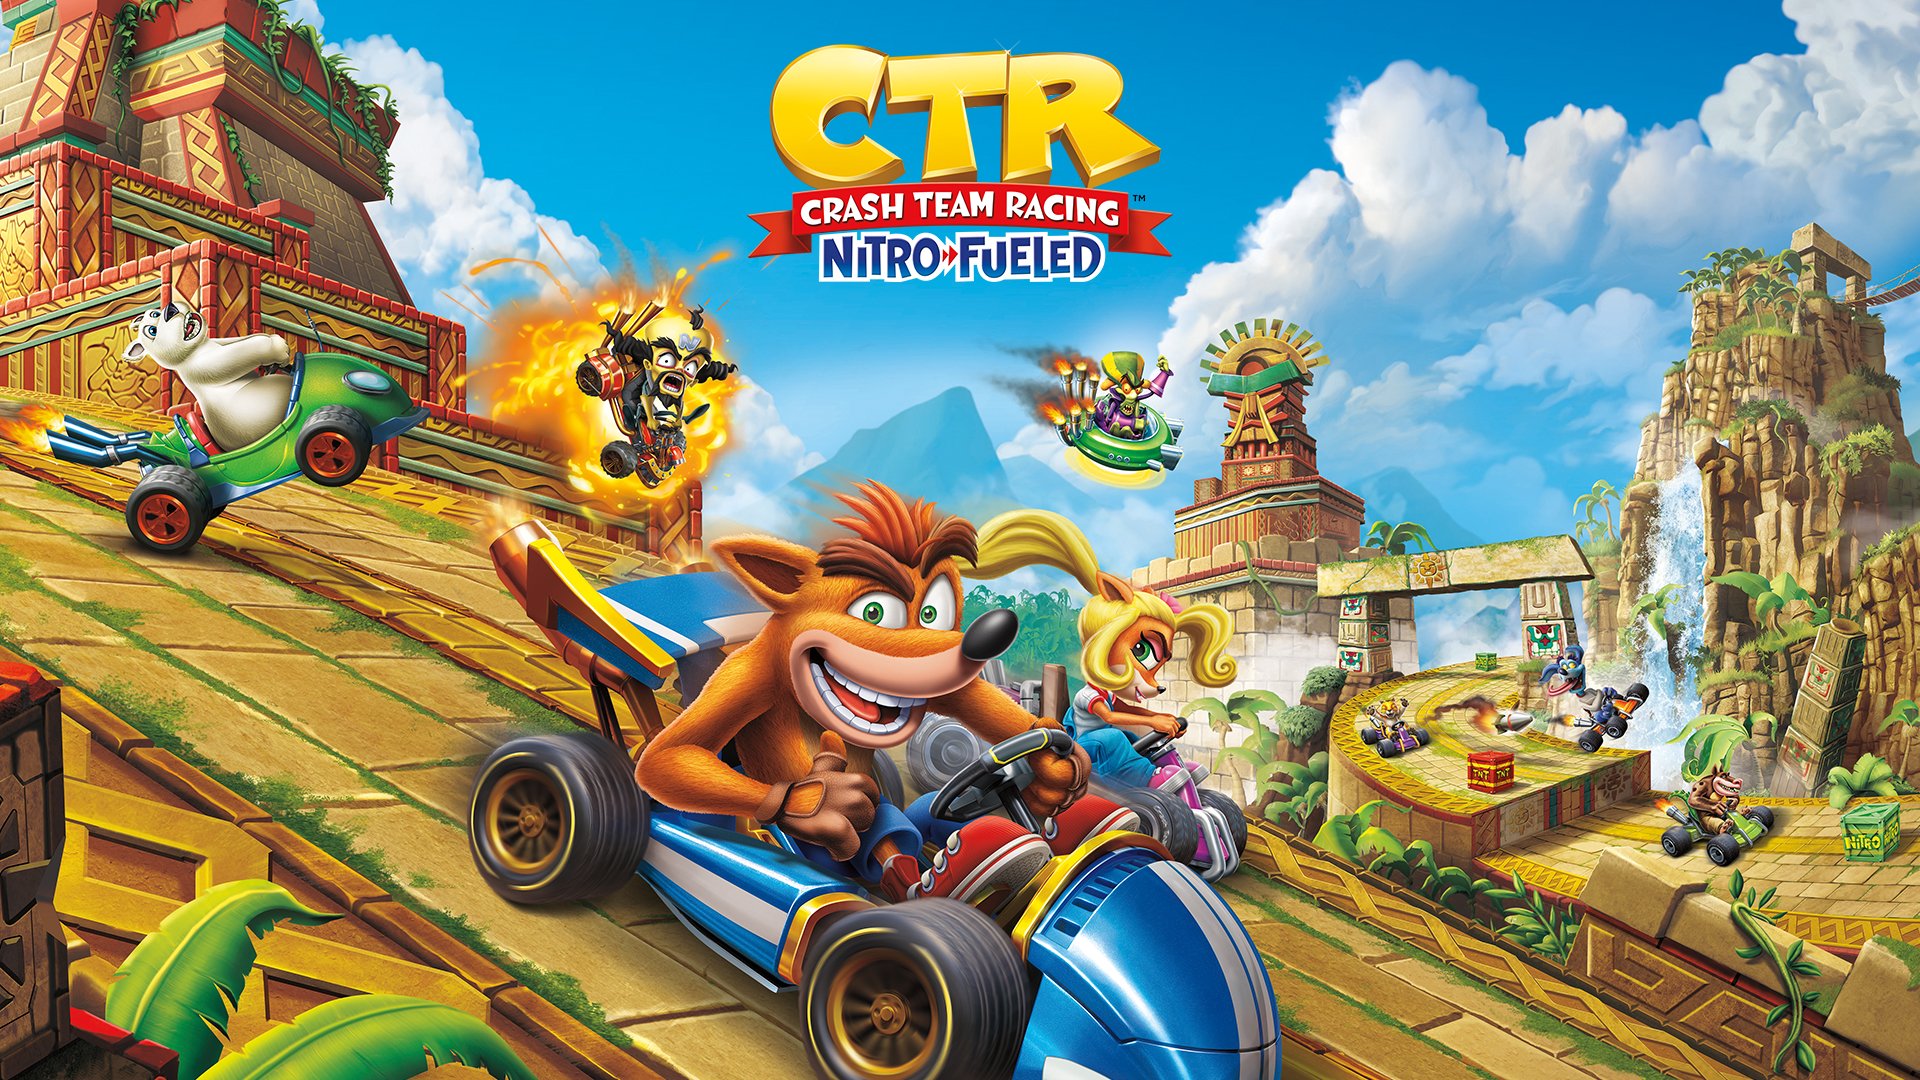 Nova Gameplay de Crash Team Racing na pista exclusiva para PS4